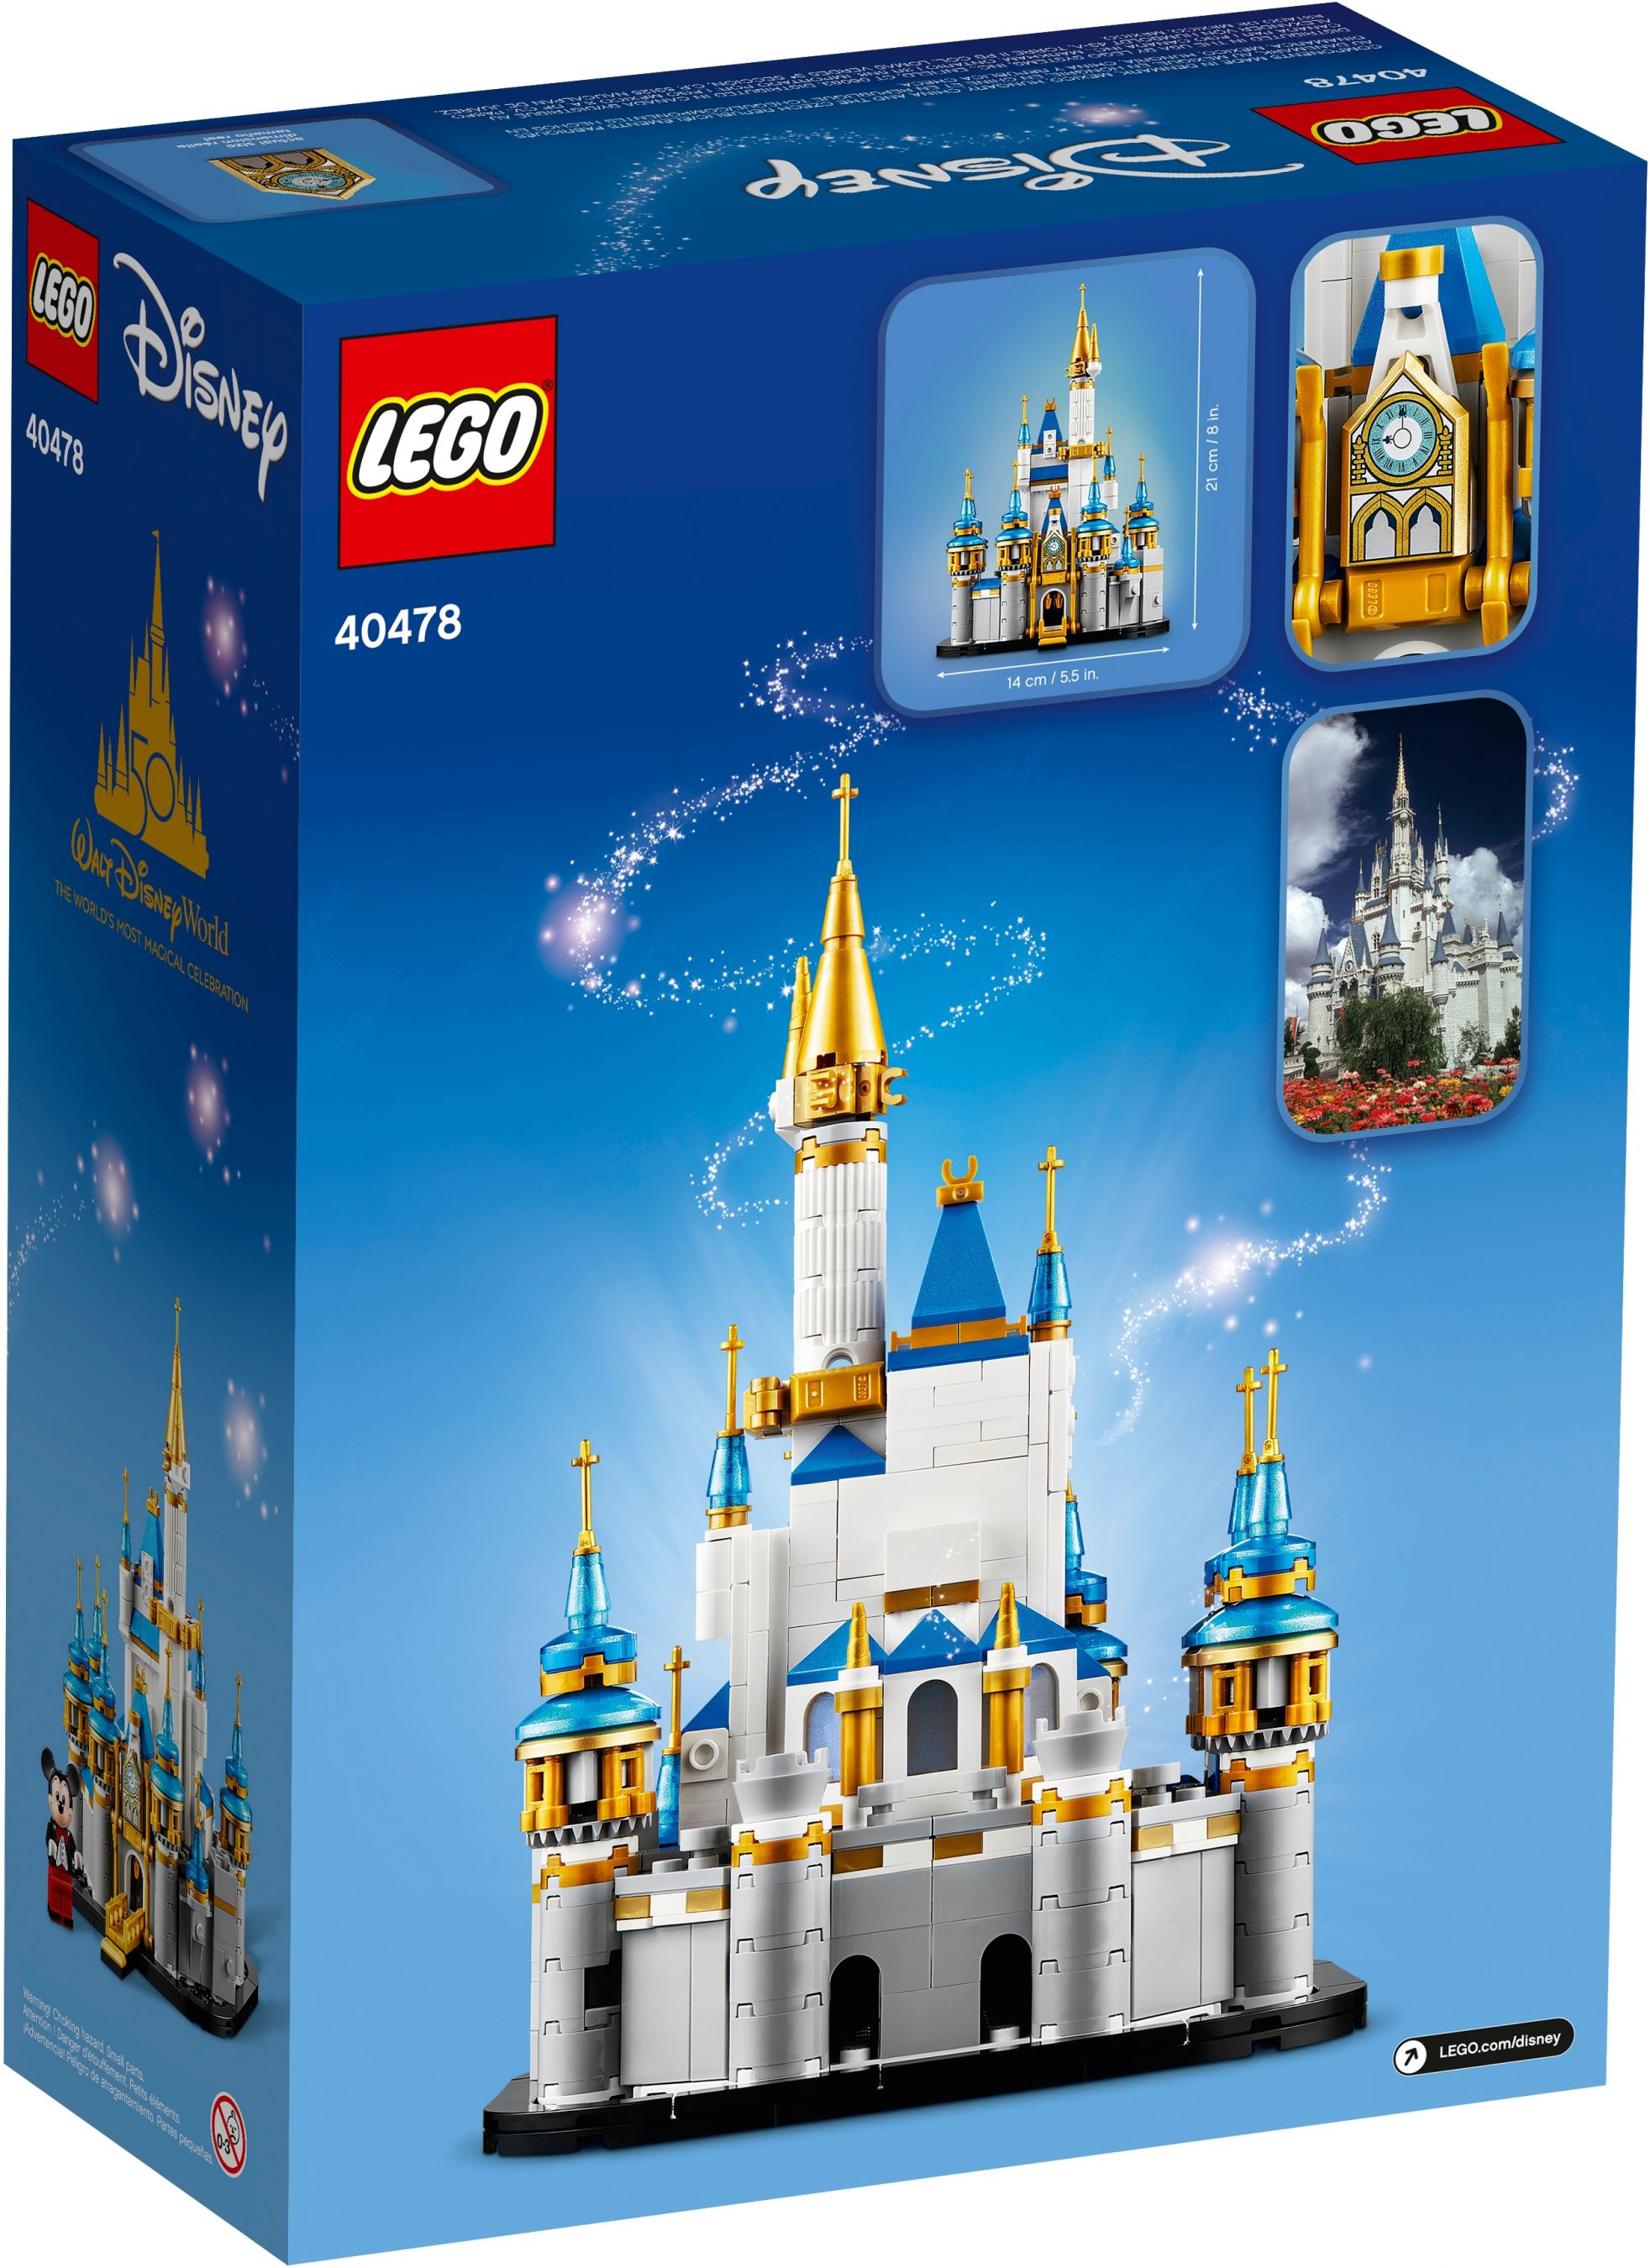 LEGO Miscellaneous 40478 Kleines Disney Schloss LEGO_40478_alt2.jpg